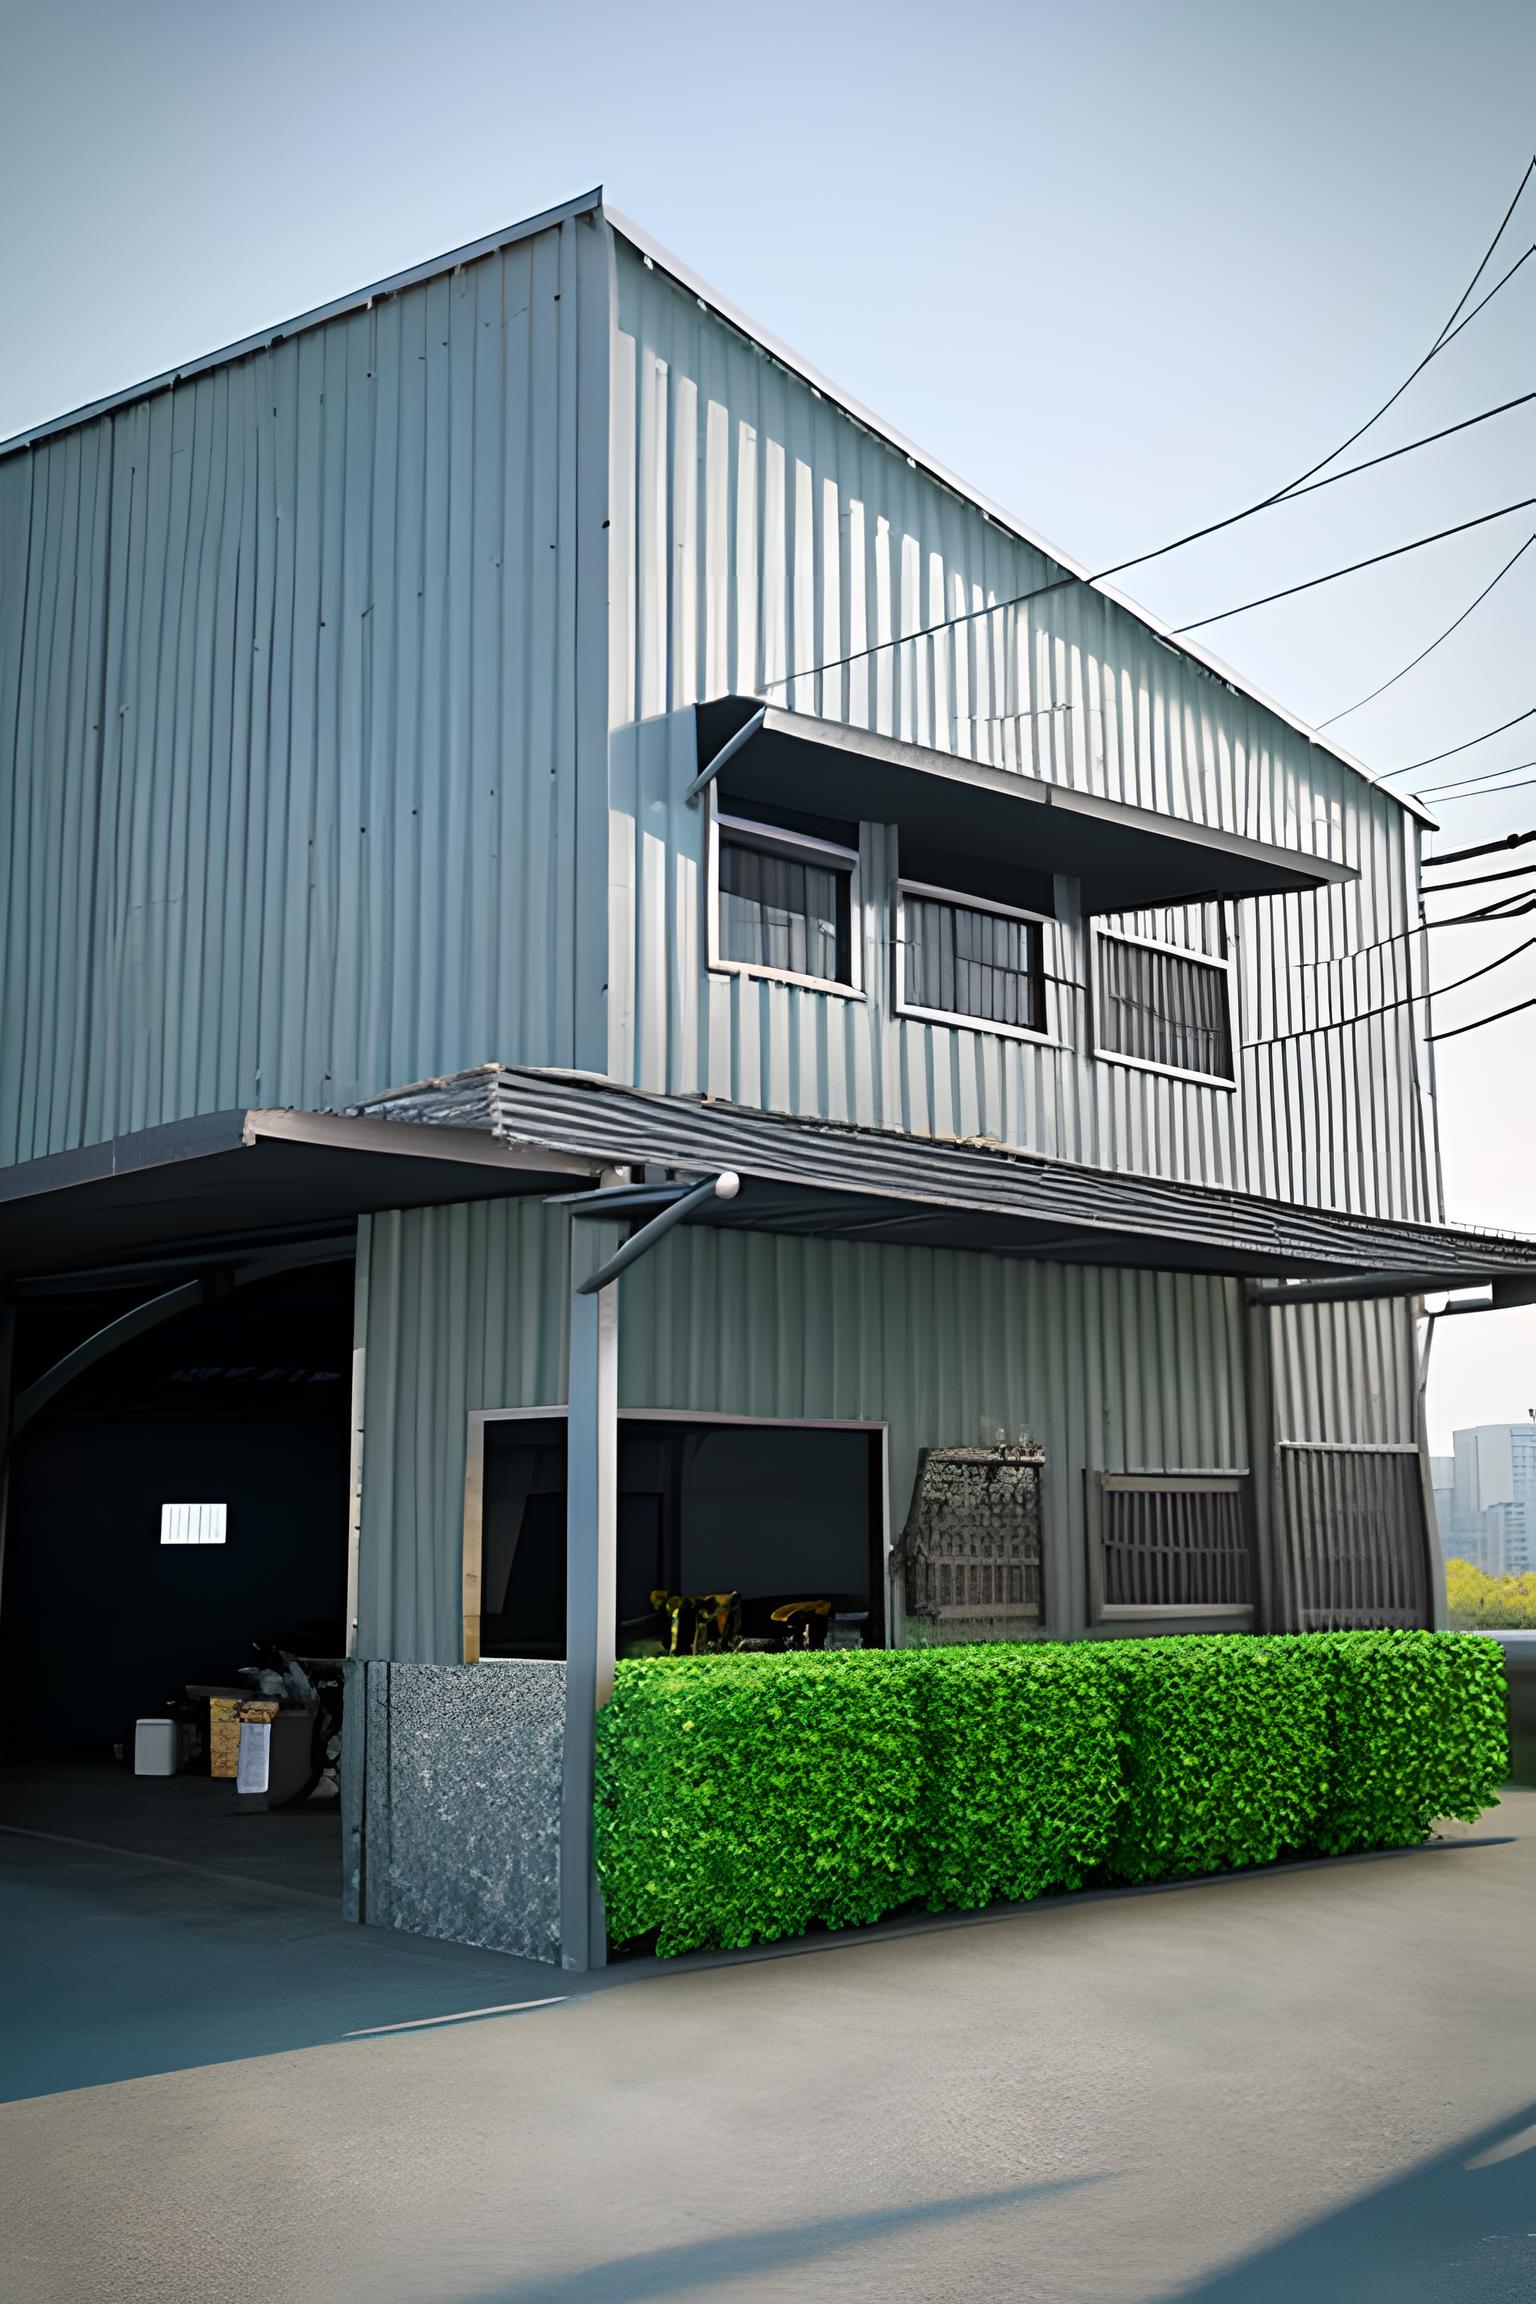 Taiwan Metal Steel Building Likeness image by jason_sd